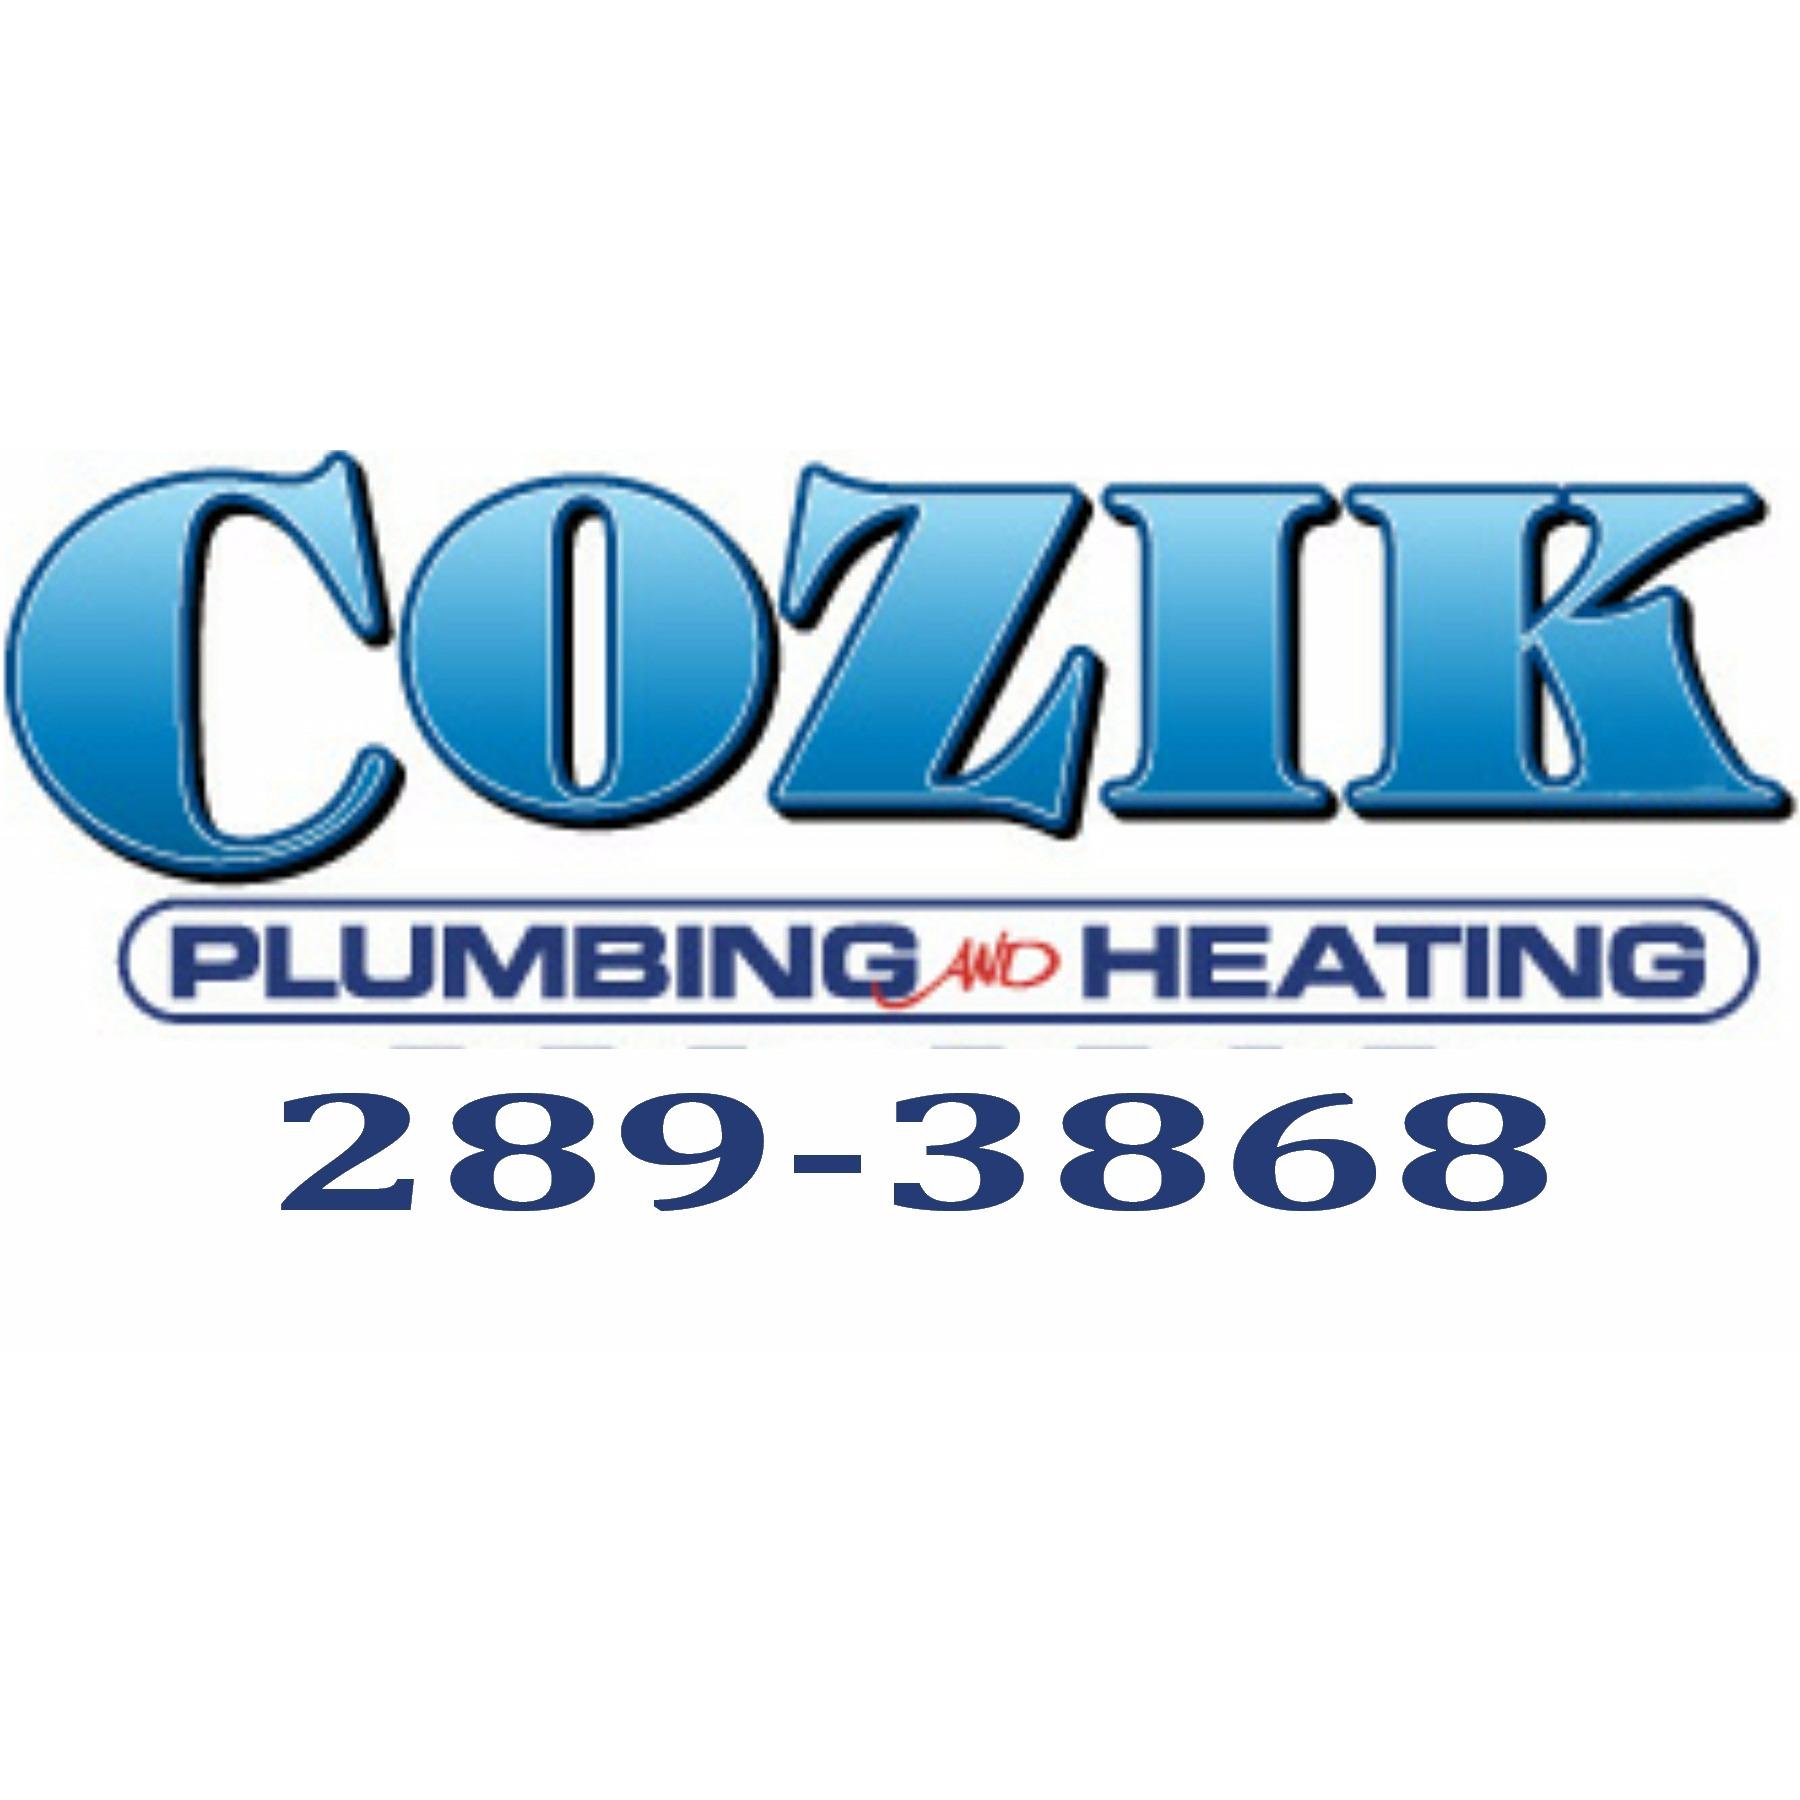 Cozik Plumbing & Heating - Rochester, MN - (507)289-3868 | ShowMeLocal.com